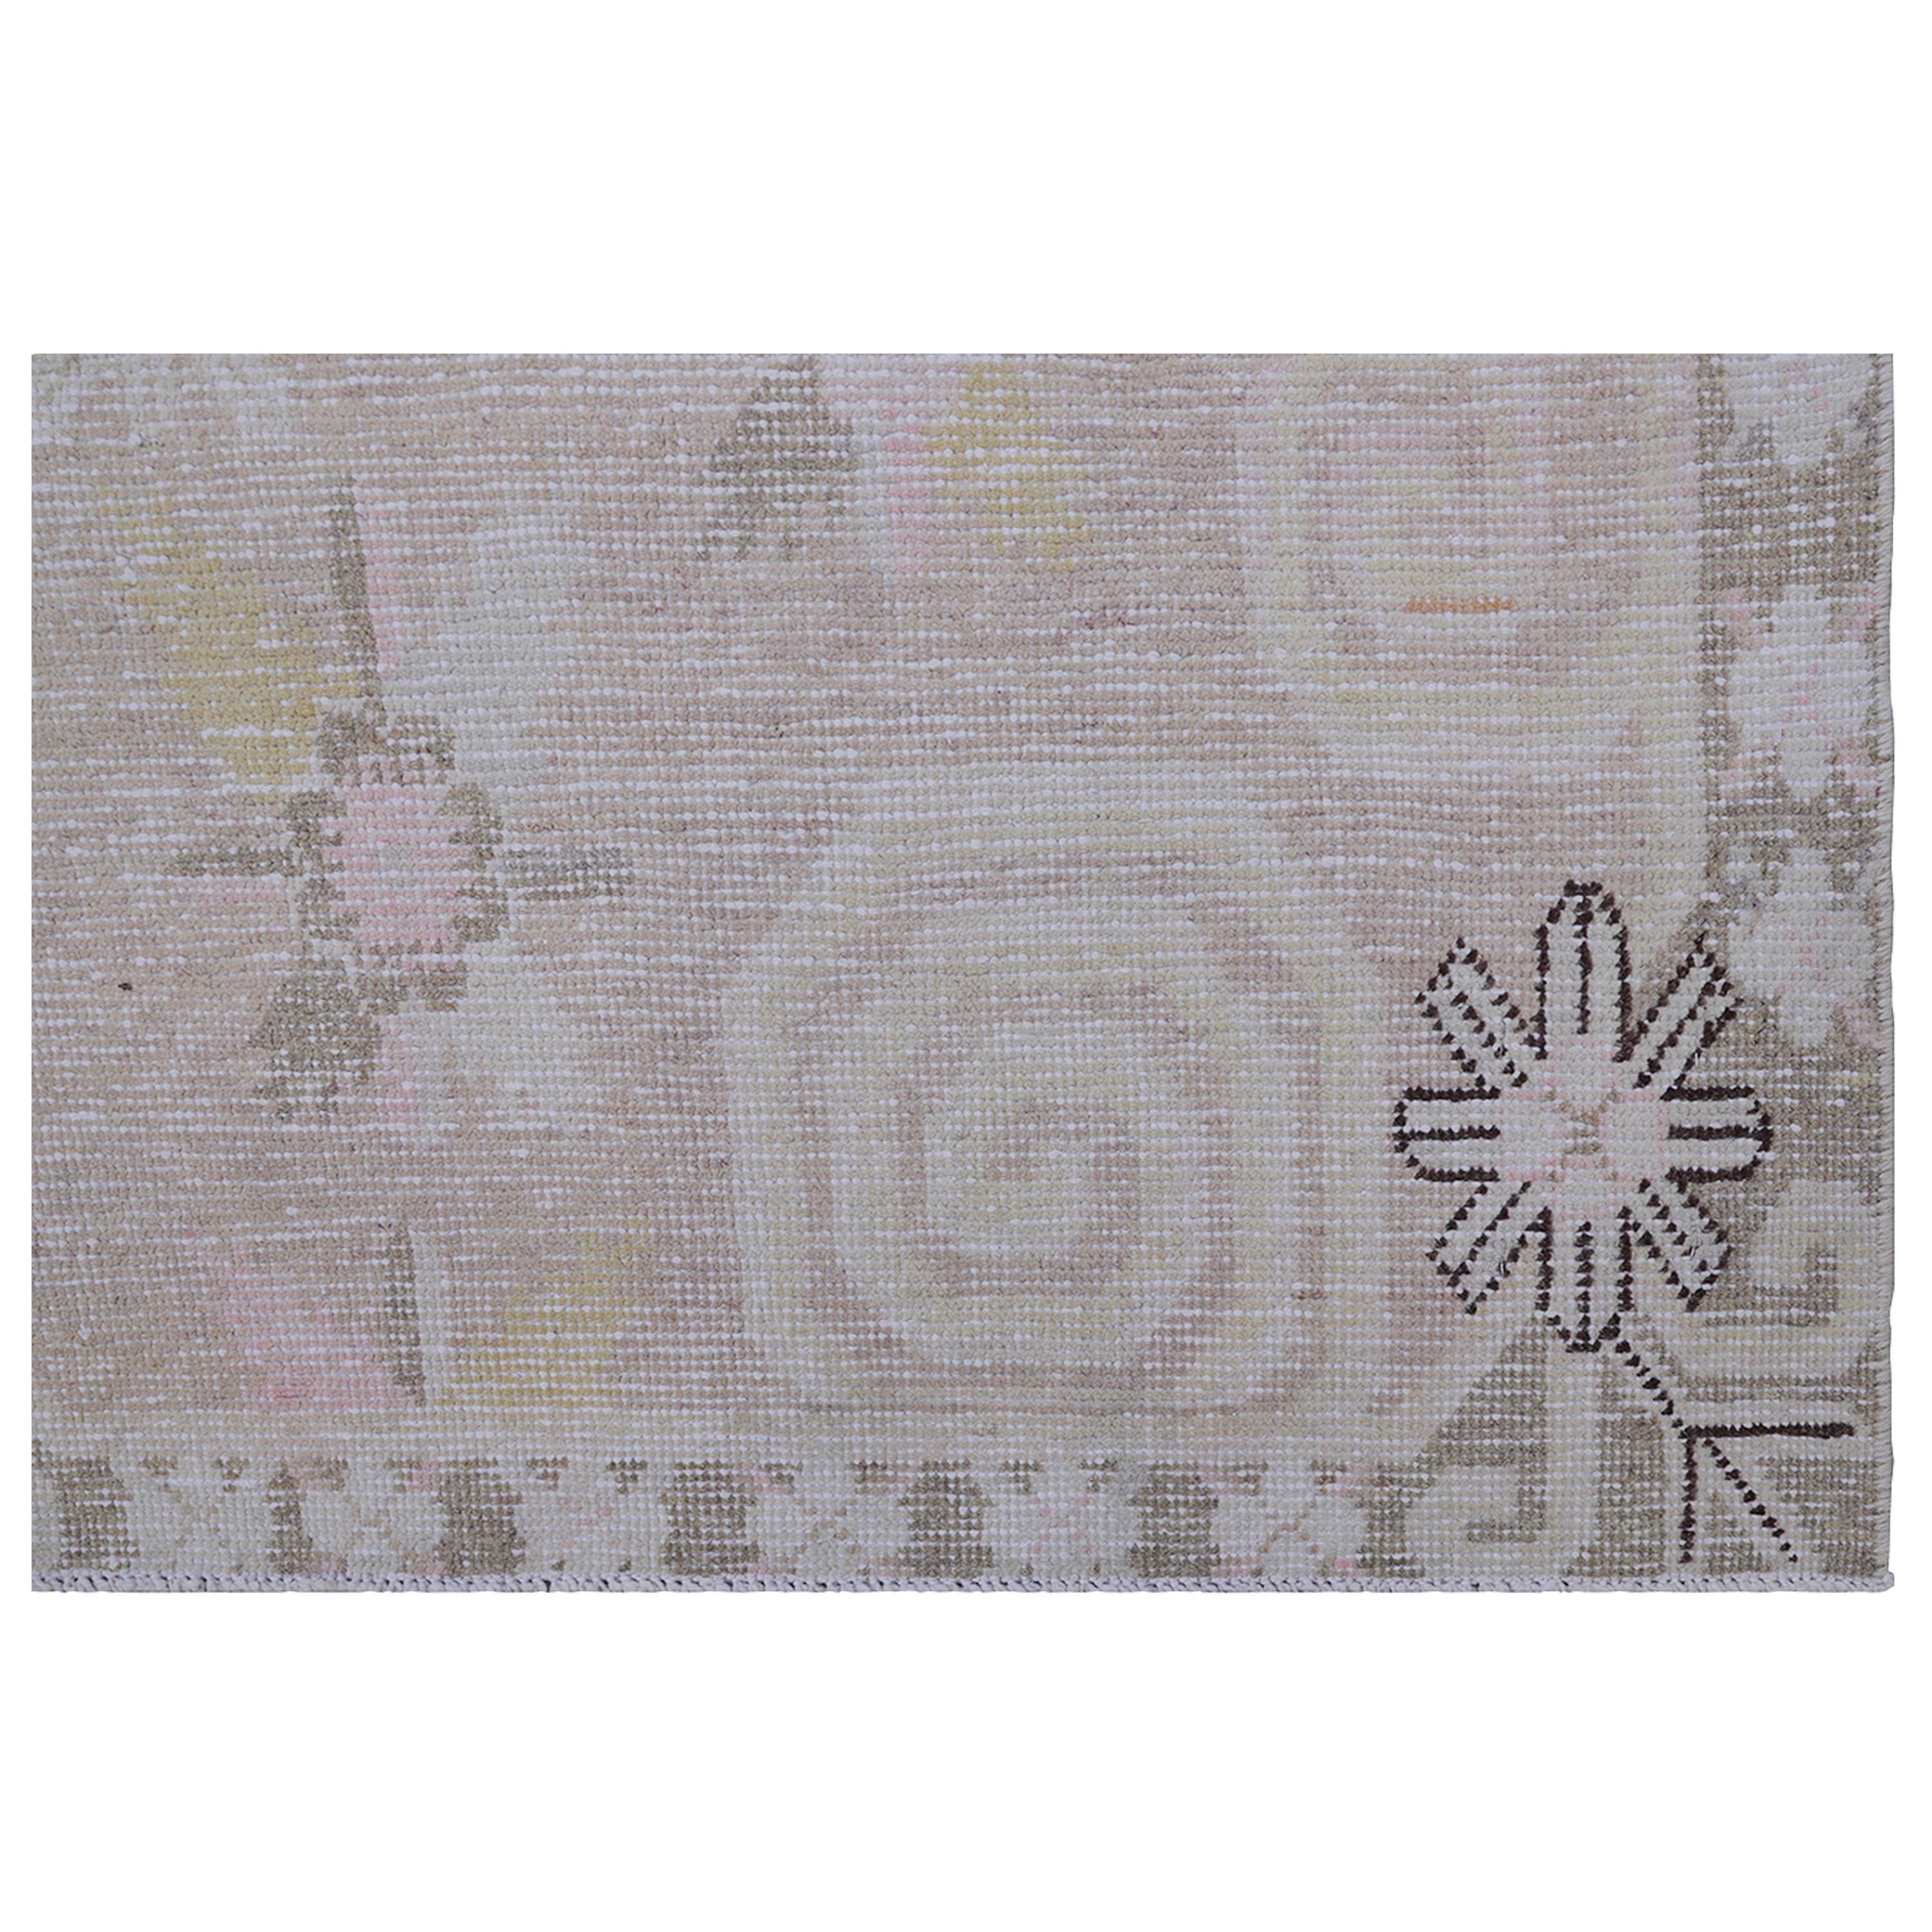 Uzbek abc carpet Grey and Pink Vintage Wool Cotton Blend Rug - 5'6